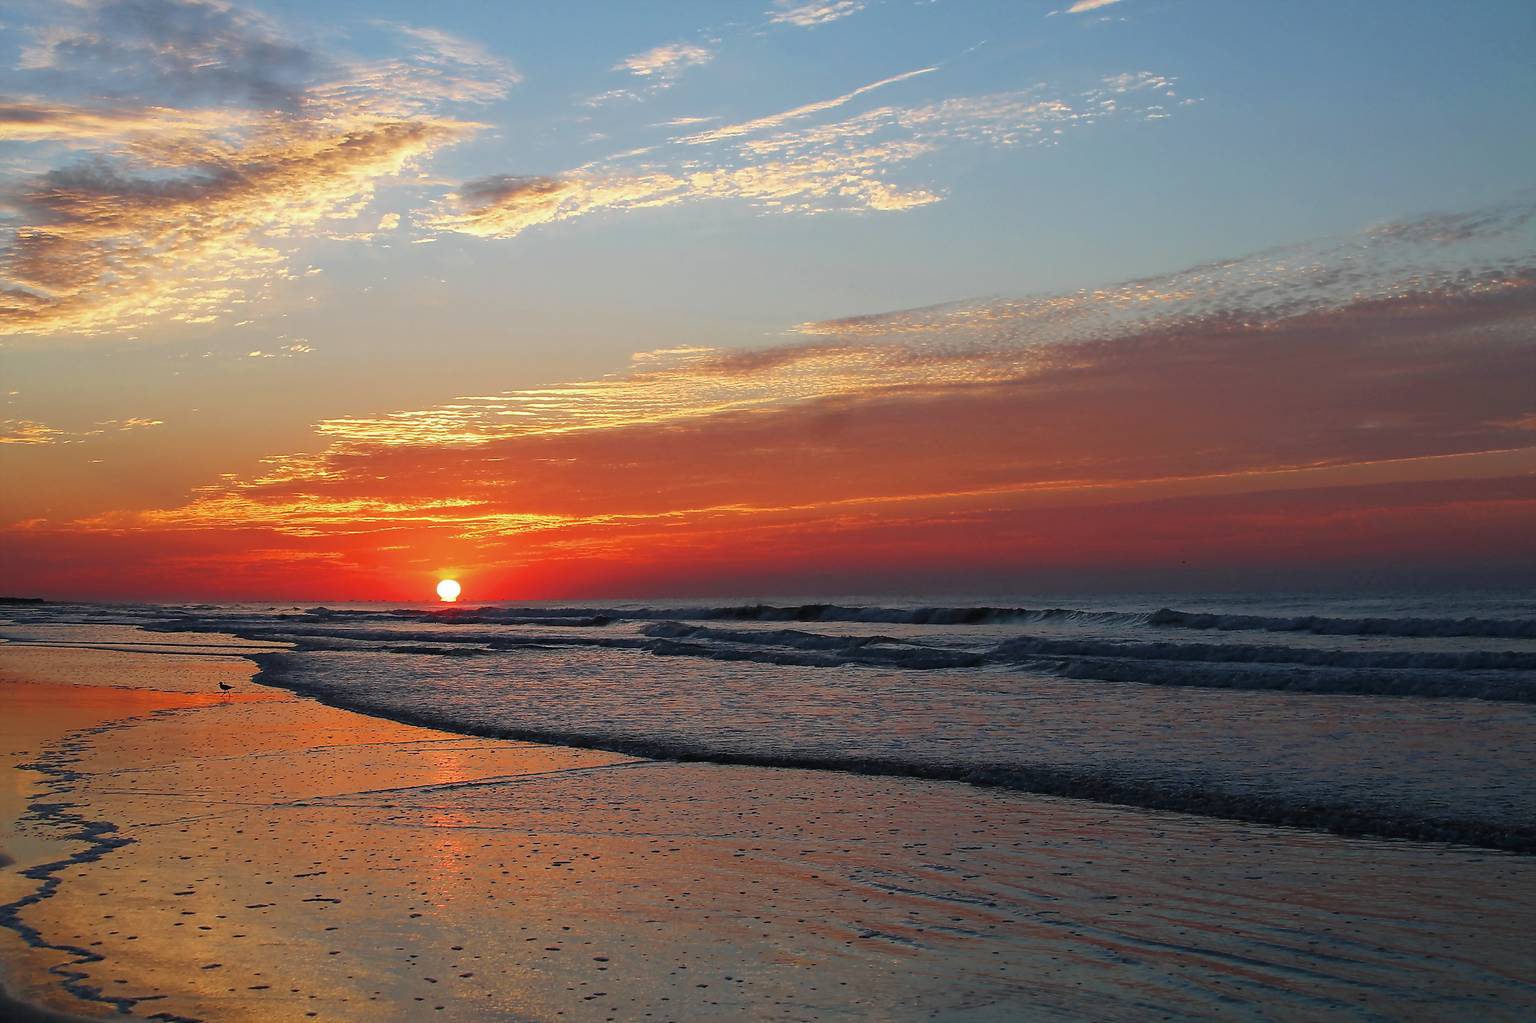 Sunset Beach, North Carolina Vacation Rentals: House Rentals, Condos, & More 